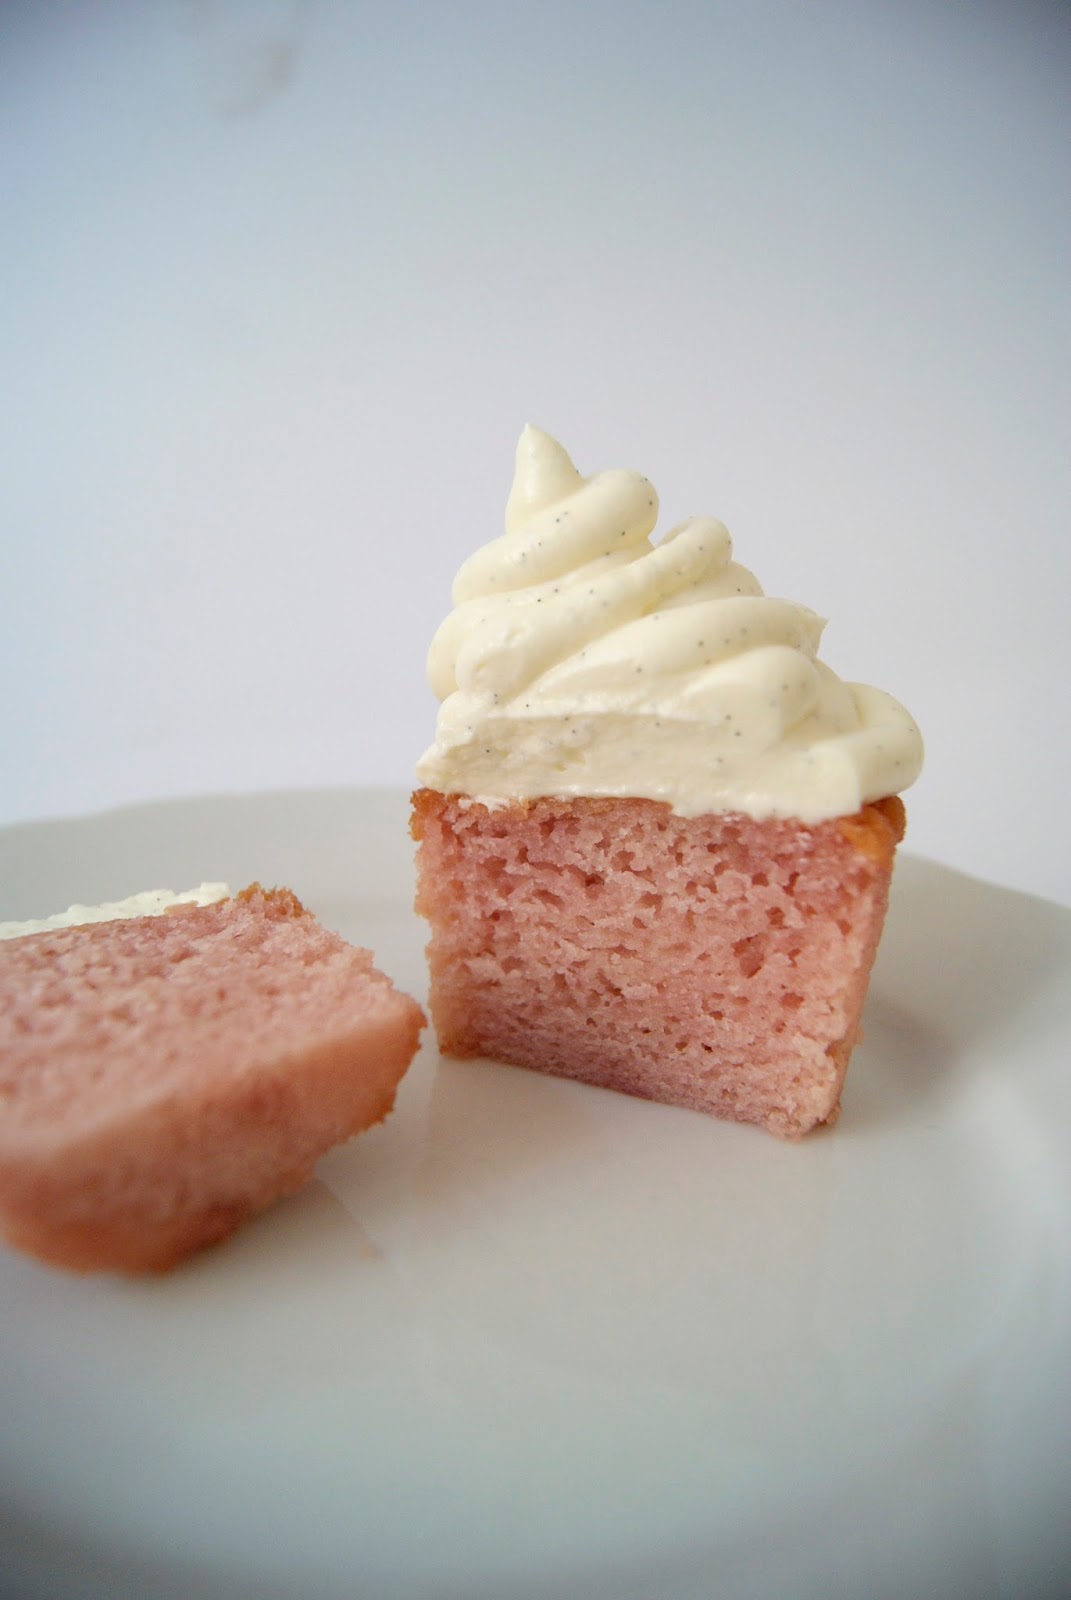 und dann kam Irma: Rosa Erdbeer-Cupcakes mit rosa Erdbeer-Frischkäse ...